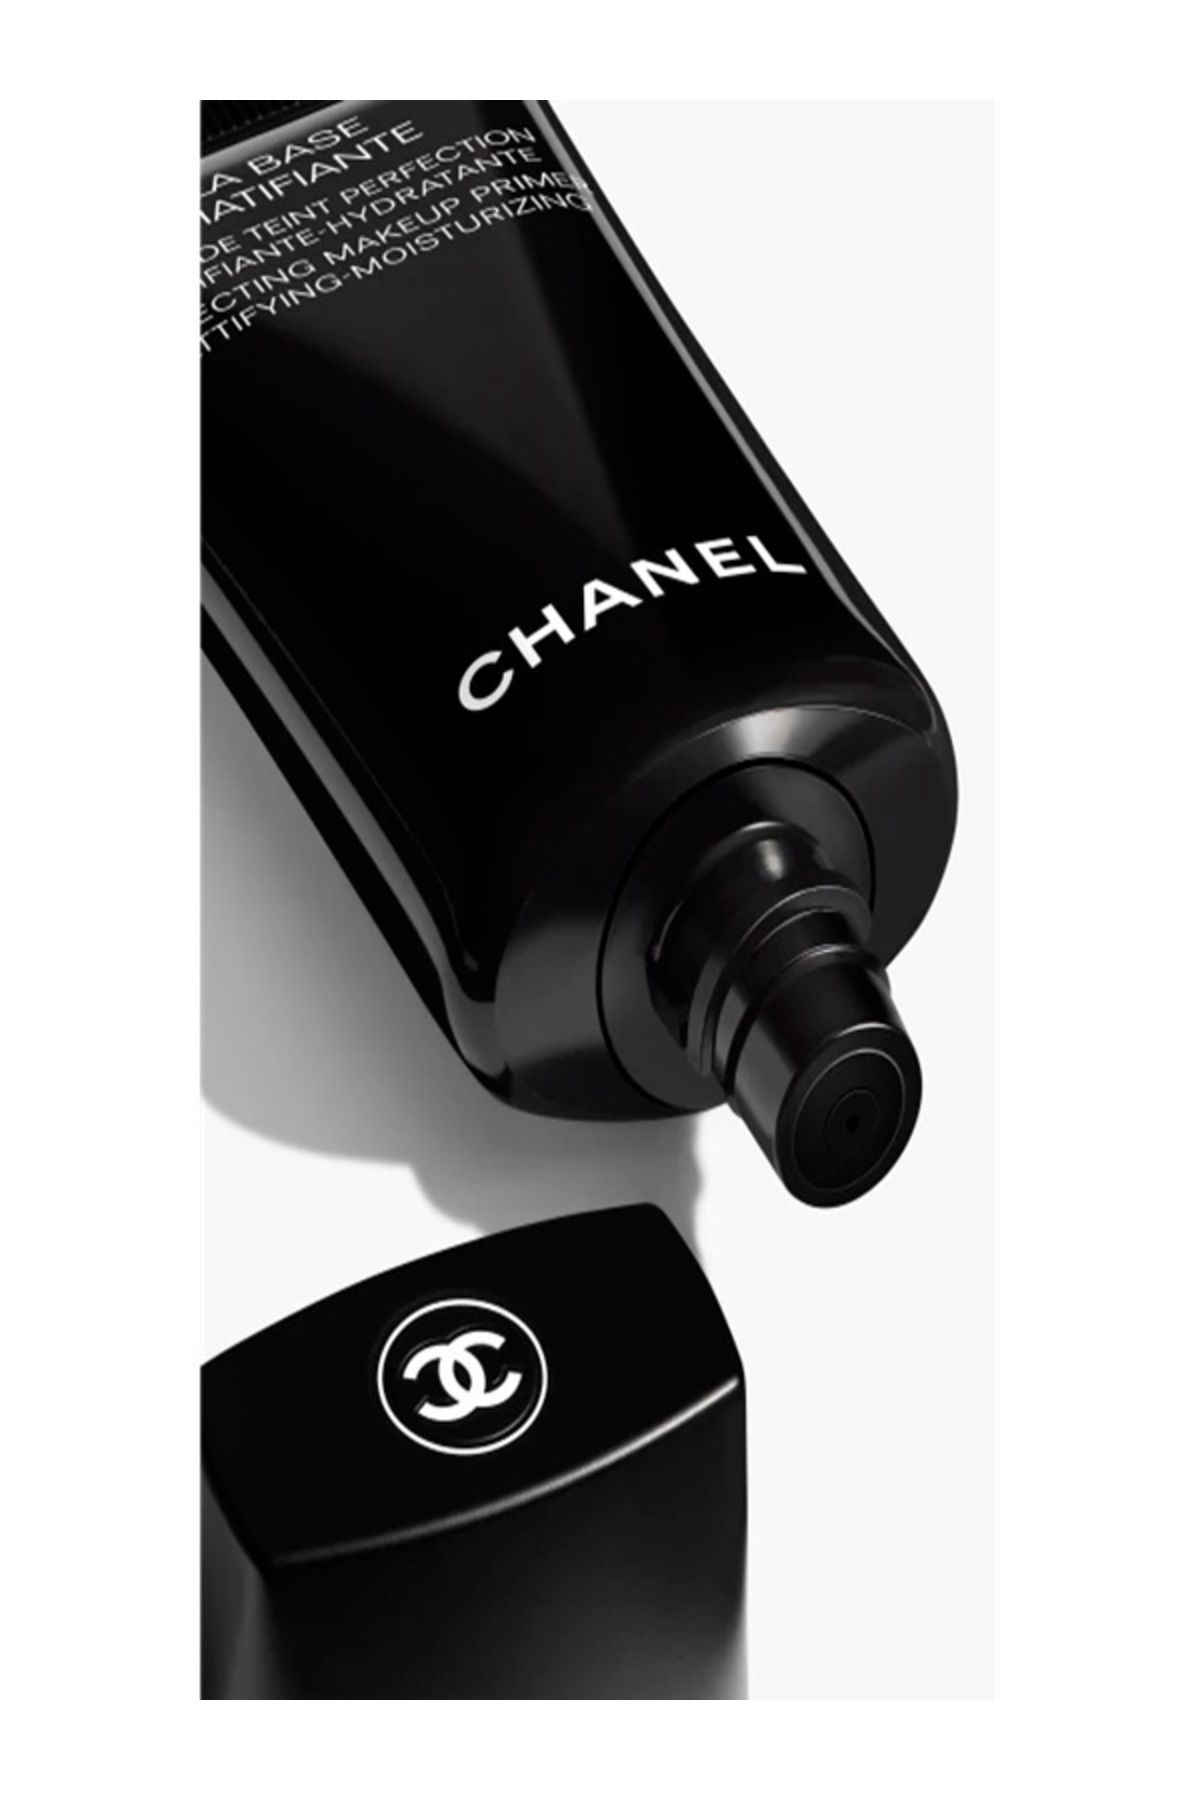 Chanel پرایمر ژلی LA BASE MATIFIANTE مرطوب کننده و مات کننده پوست